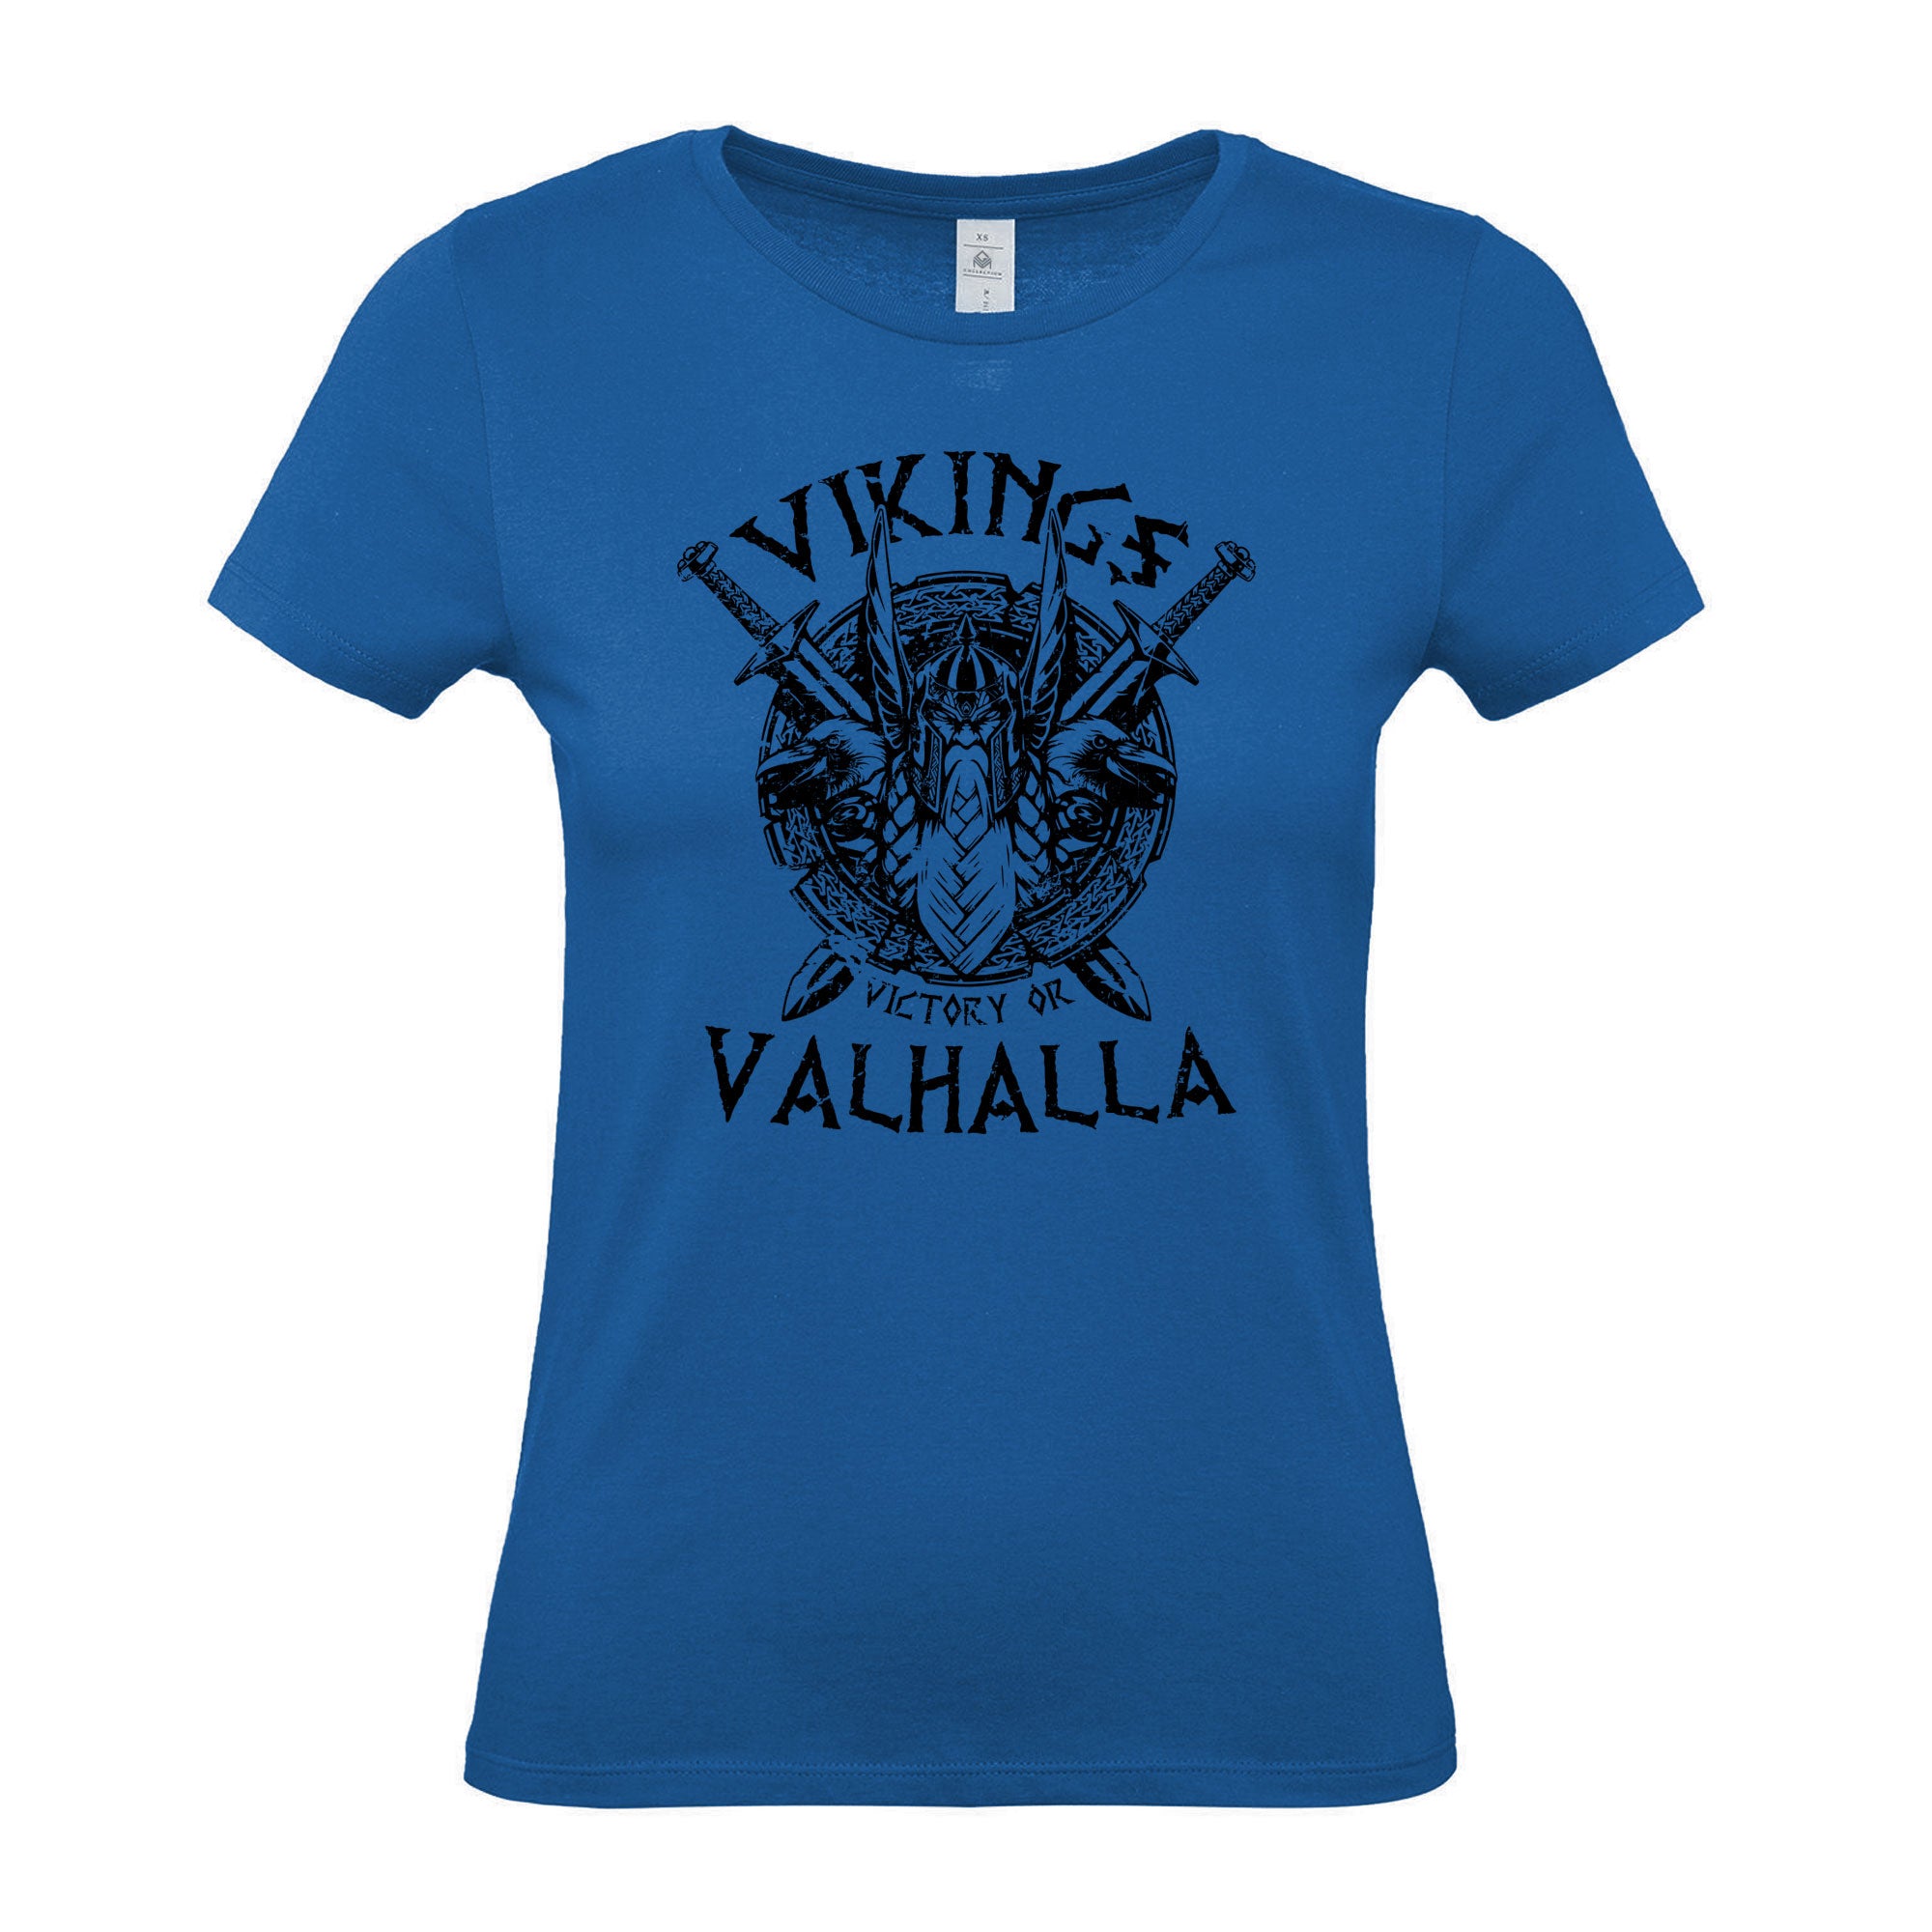 Victory Or Valhalla - Women's Gym T-Shirt